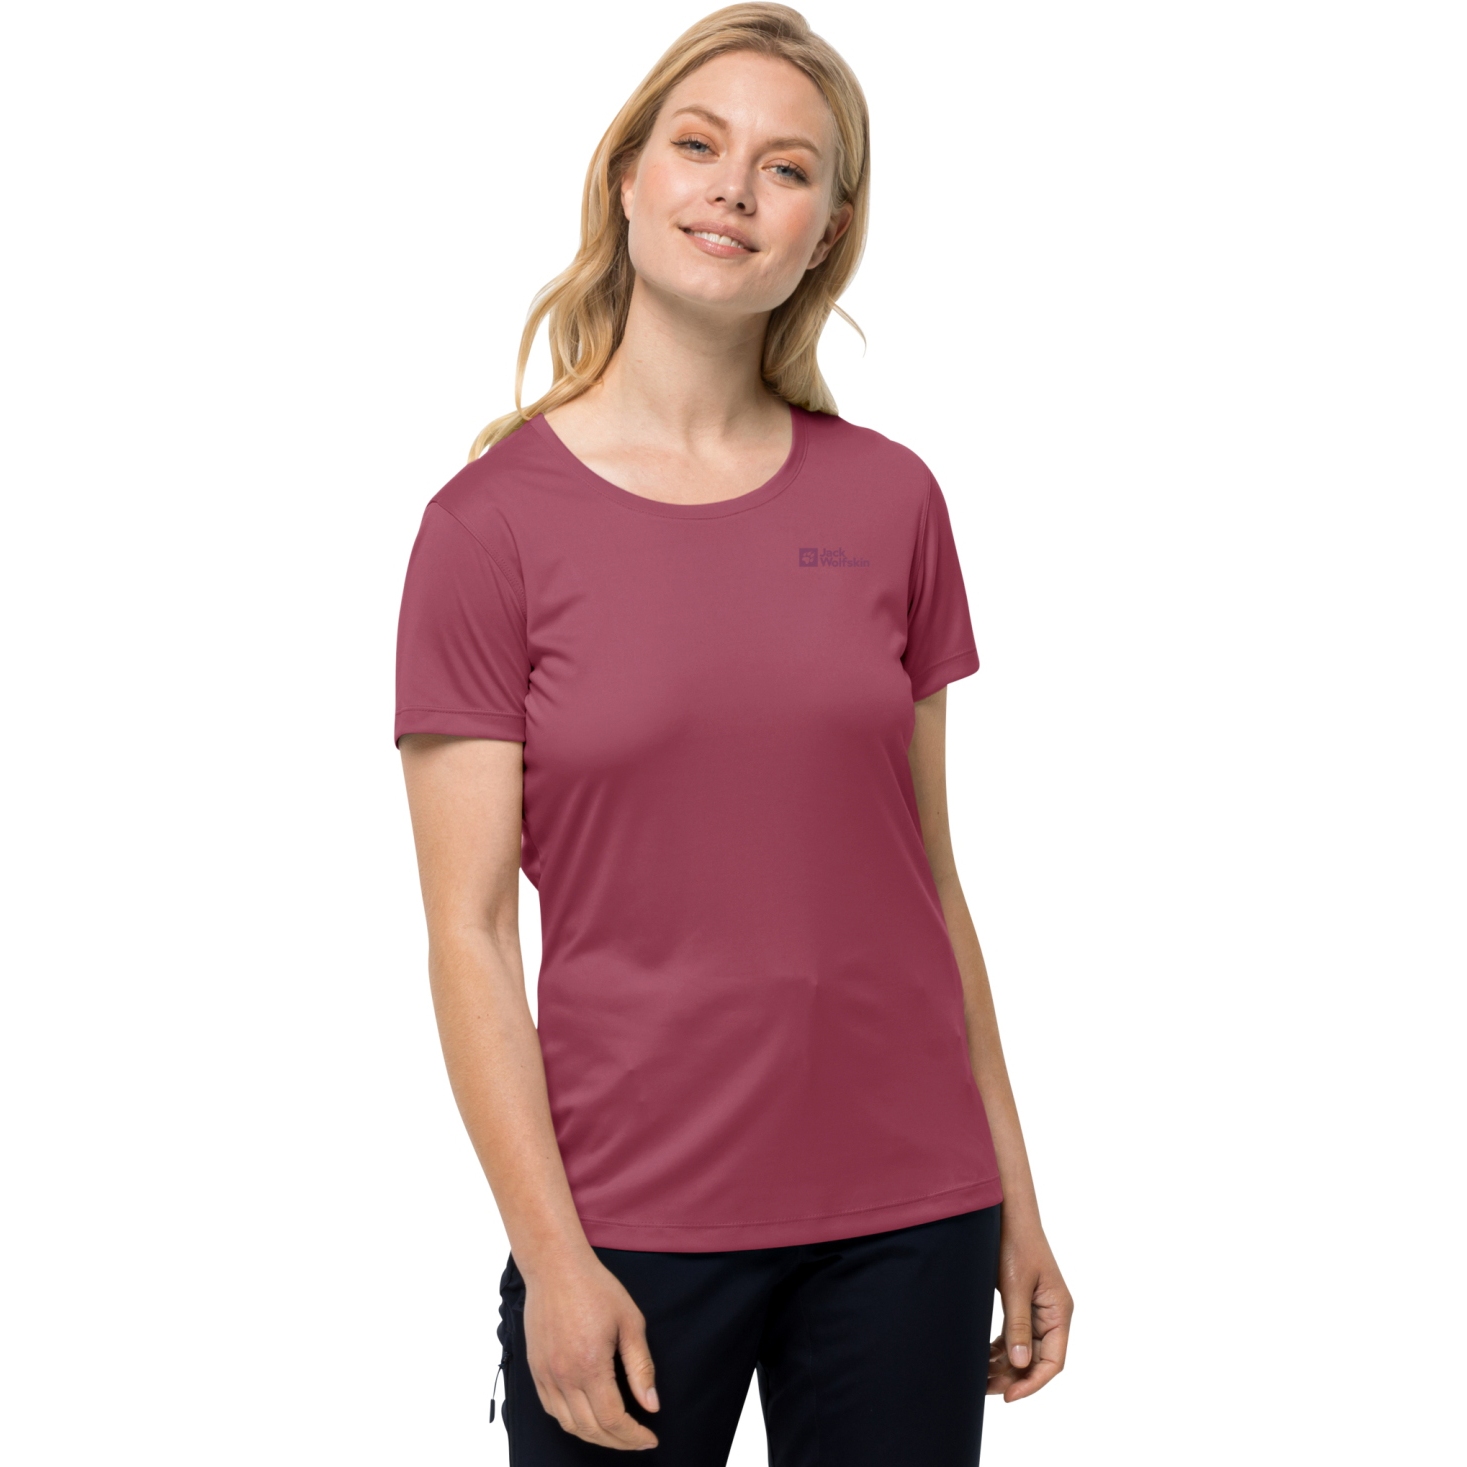 Productfoto van Jack Wolfskin Tech Dames T-Shirt - sangria red